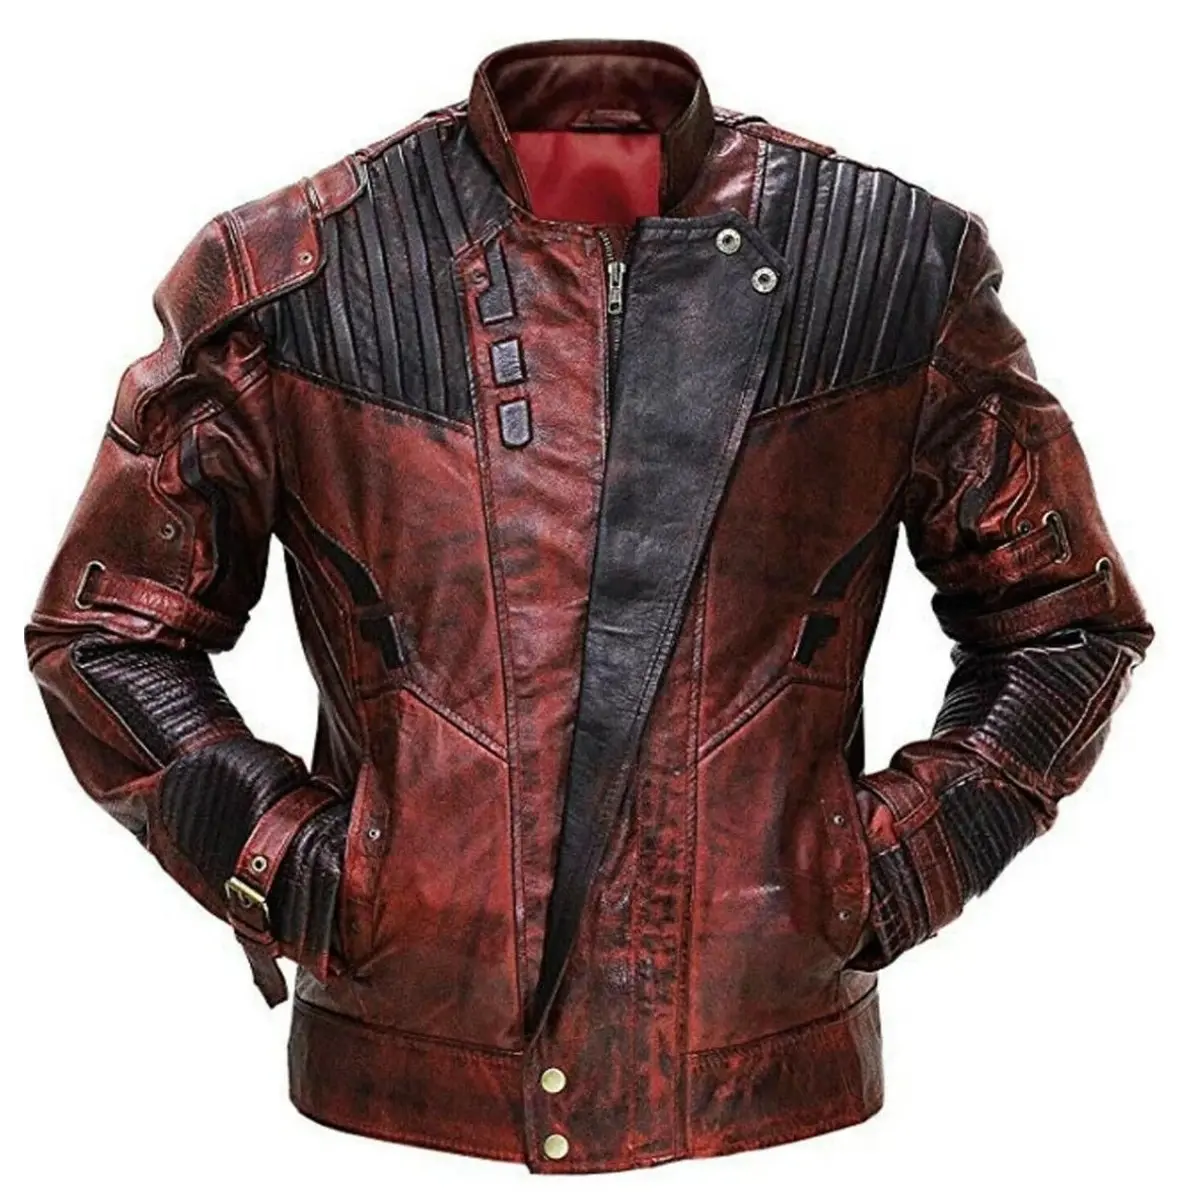 Men's red & black Handmade Quilted motorcycle biker Leather Jacket Slim Fit Riders Celebrity Jacket